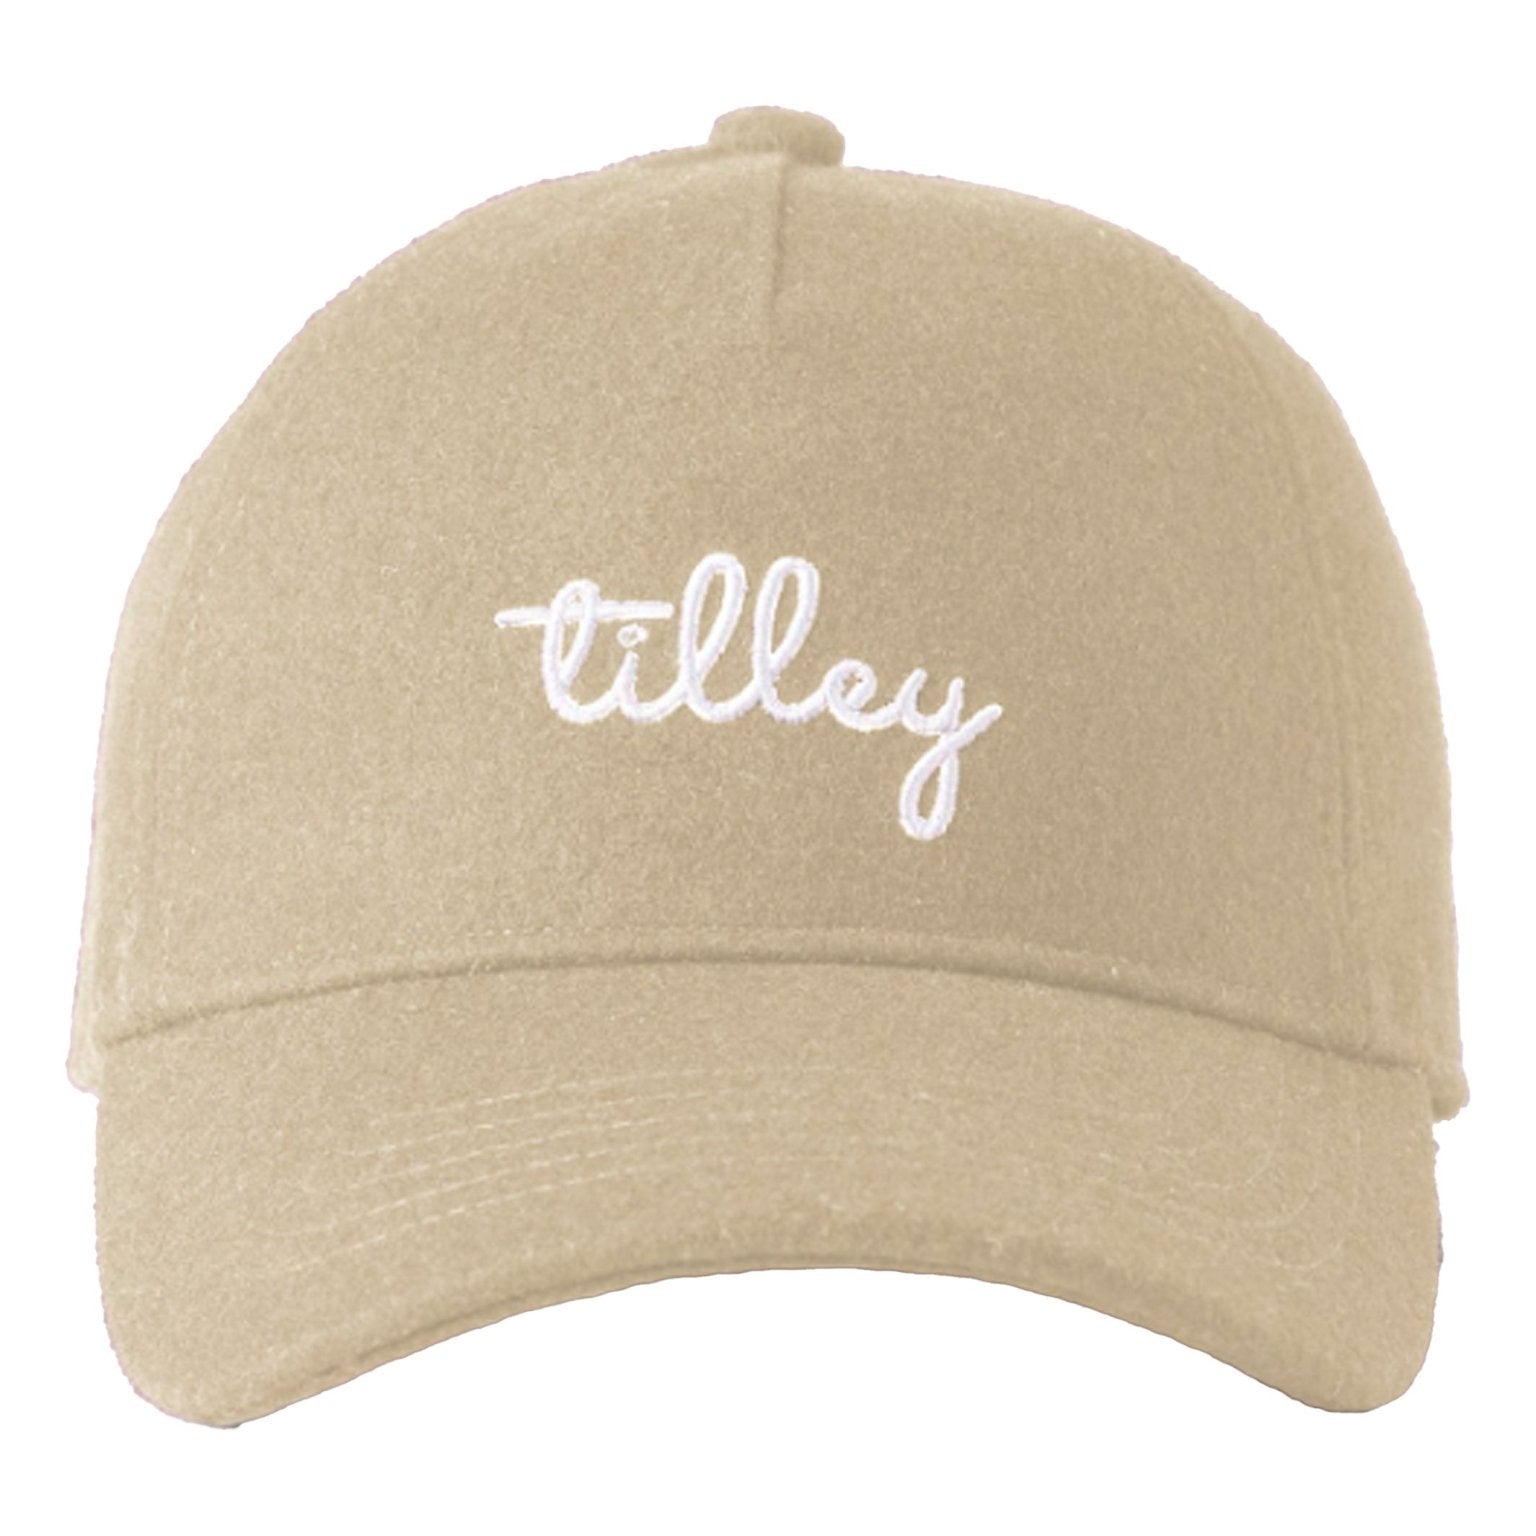 4elementsclothingTilleyTilley - Wool Baseball Cap / Hat - Chain stitched ball cap / hatHatsH03HT4027/CAMEL/SM